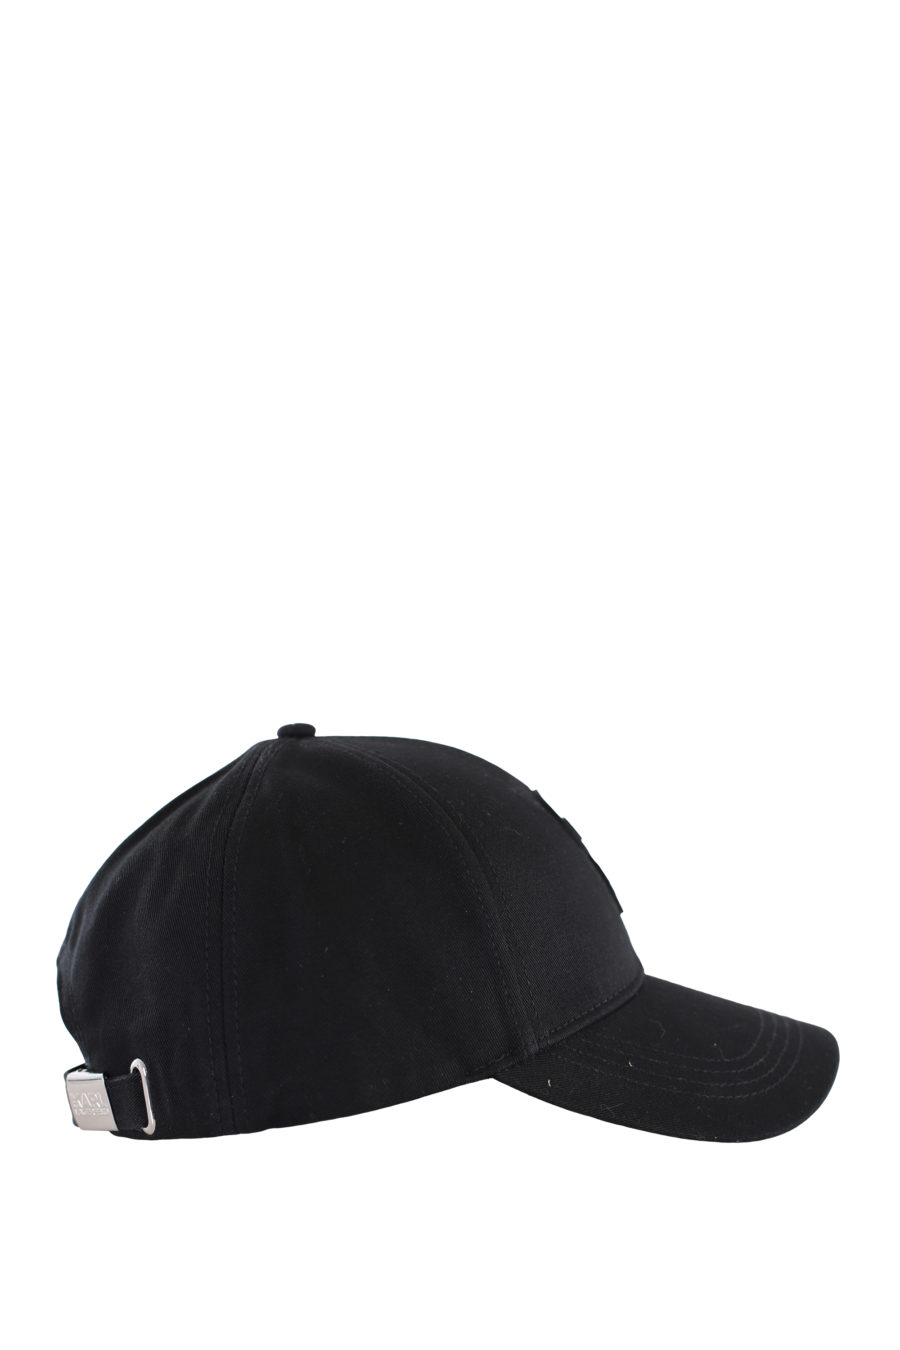 Gorra negra con logo "Karl" - IMG 1772